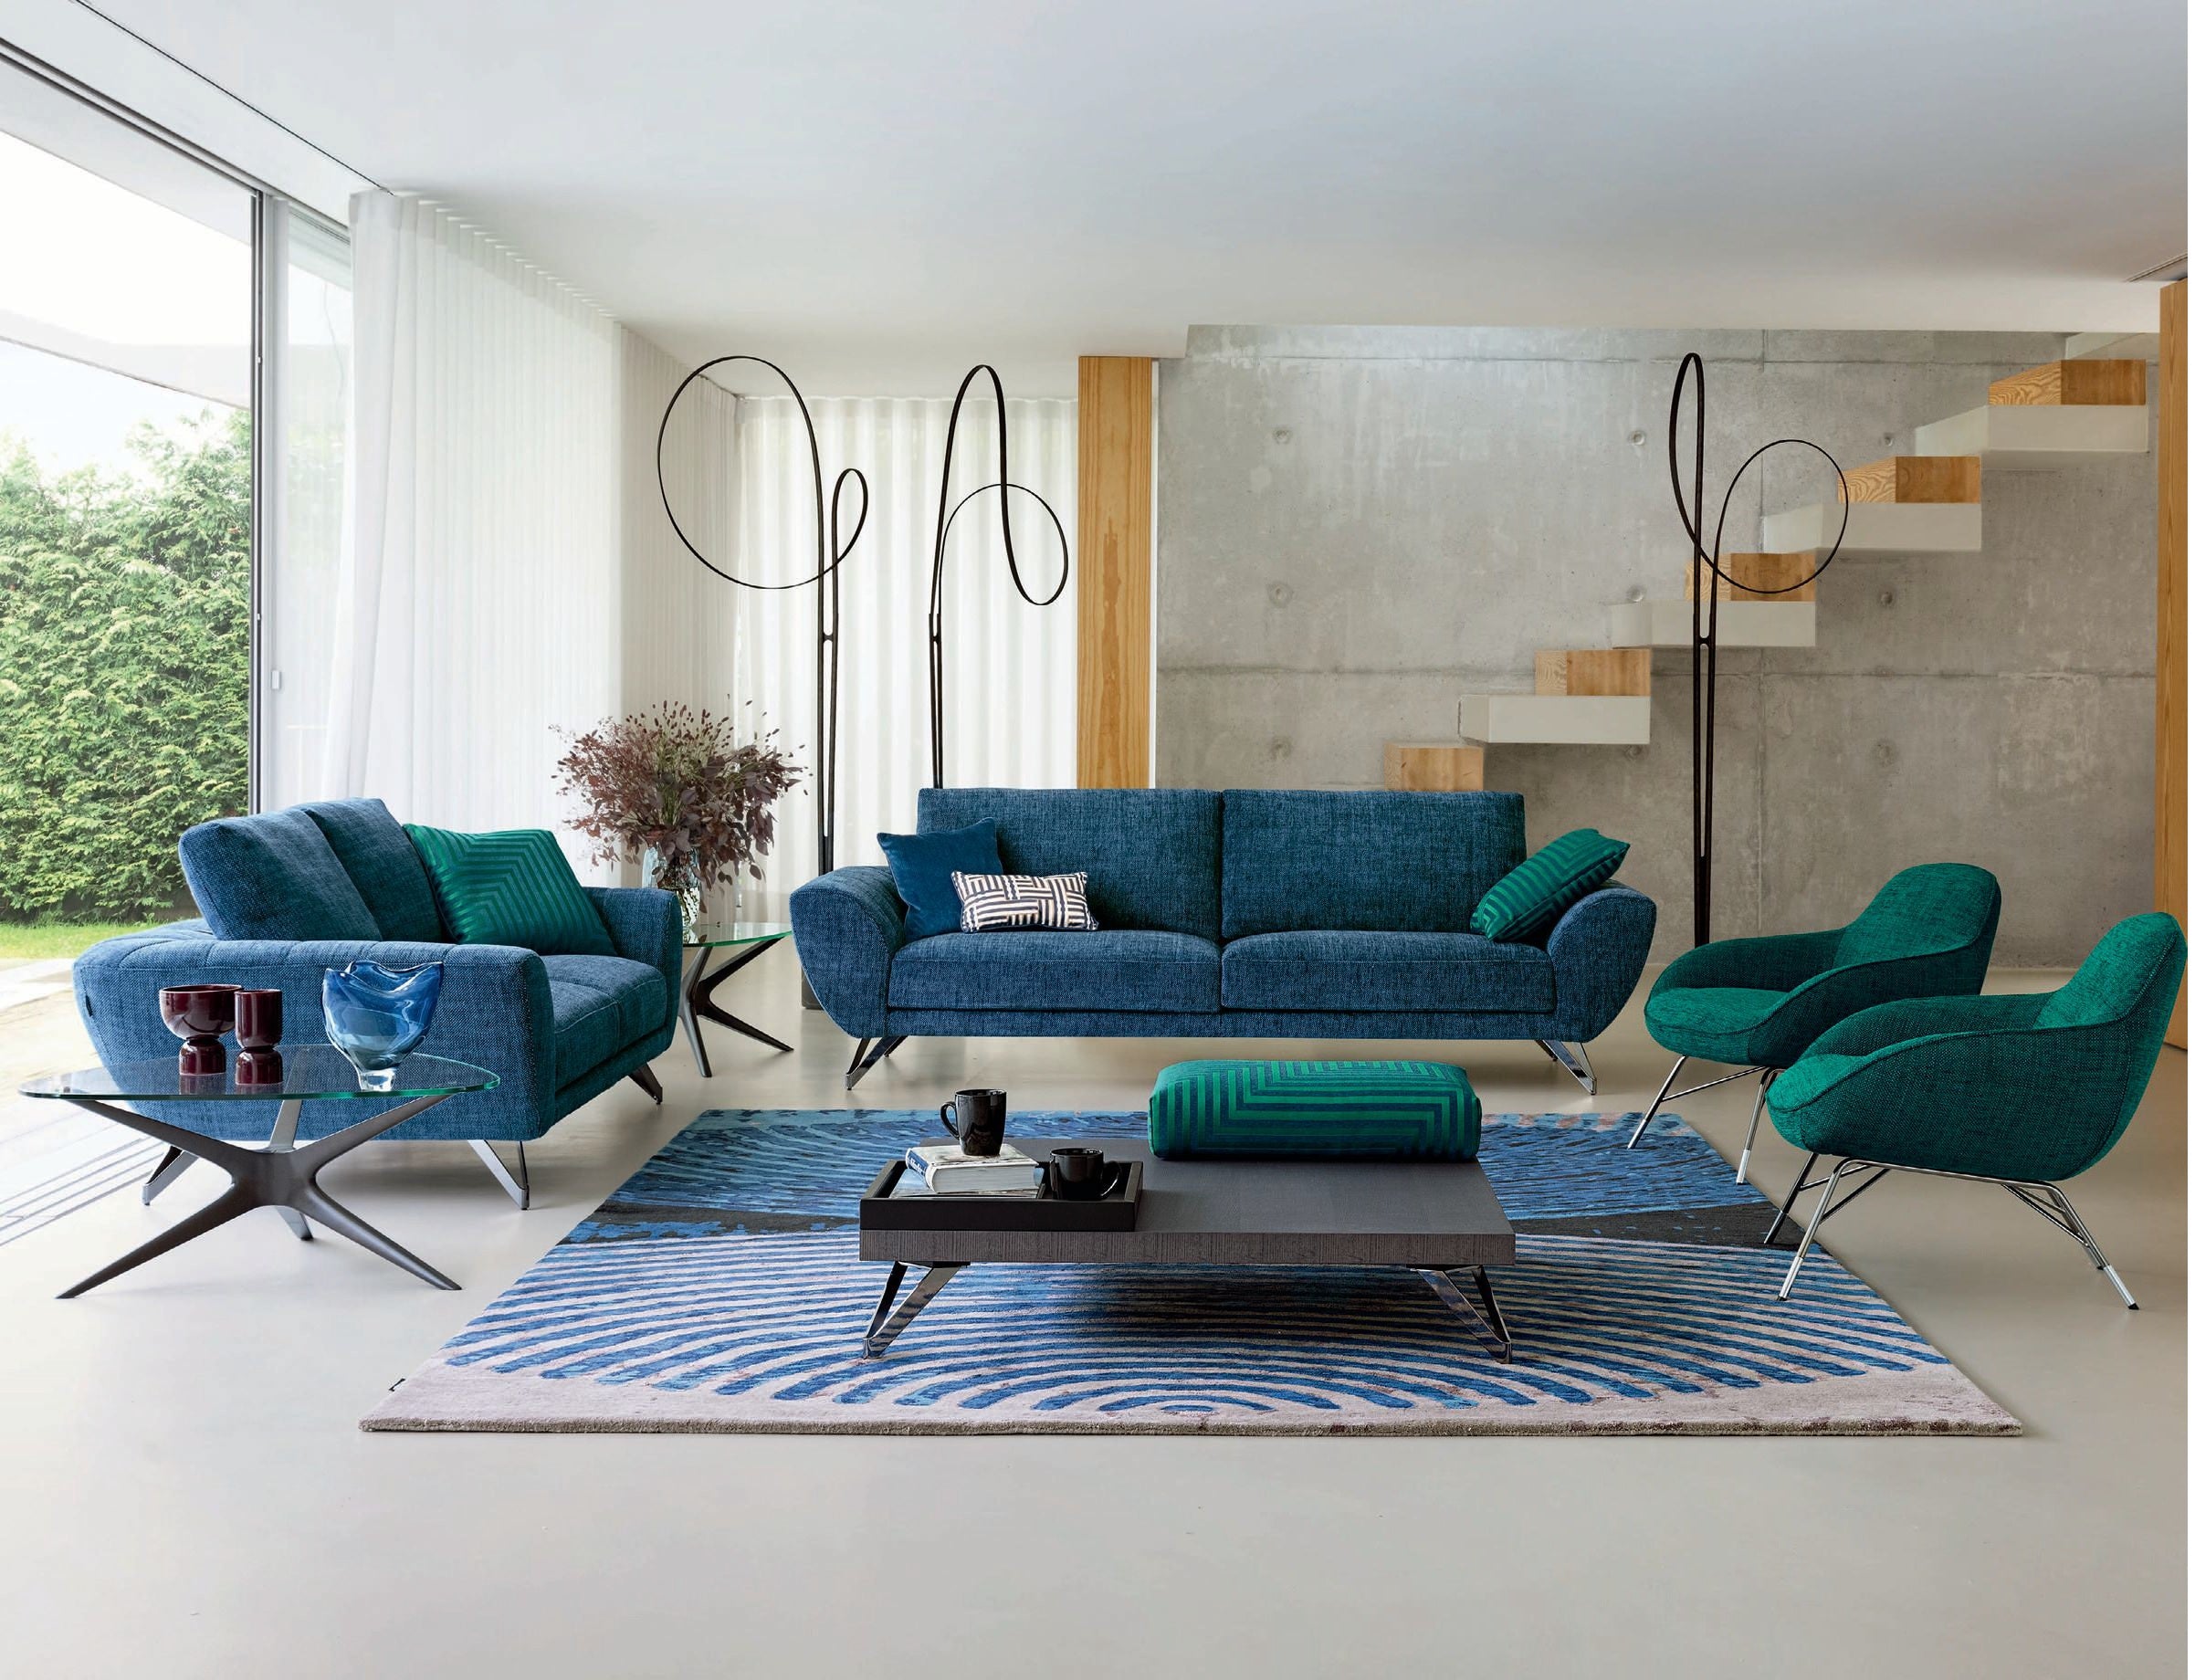 livingroom with blue-green sofas